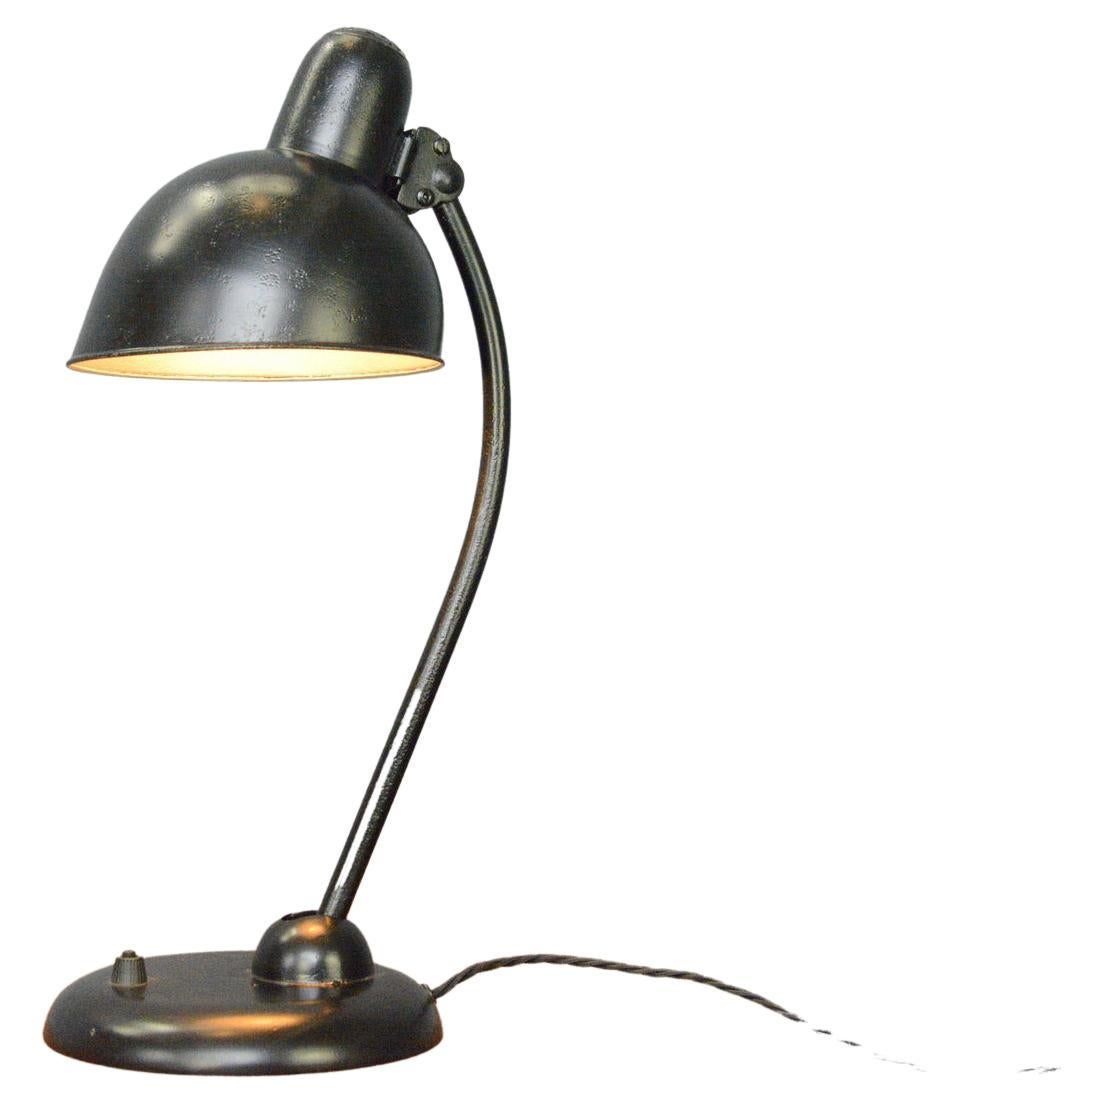 Modell 6556 Tischlampe von Kaiser Jdell um 1930